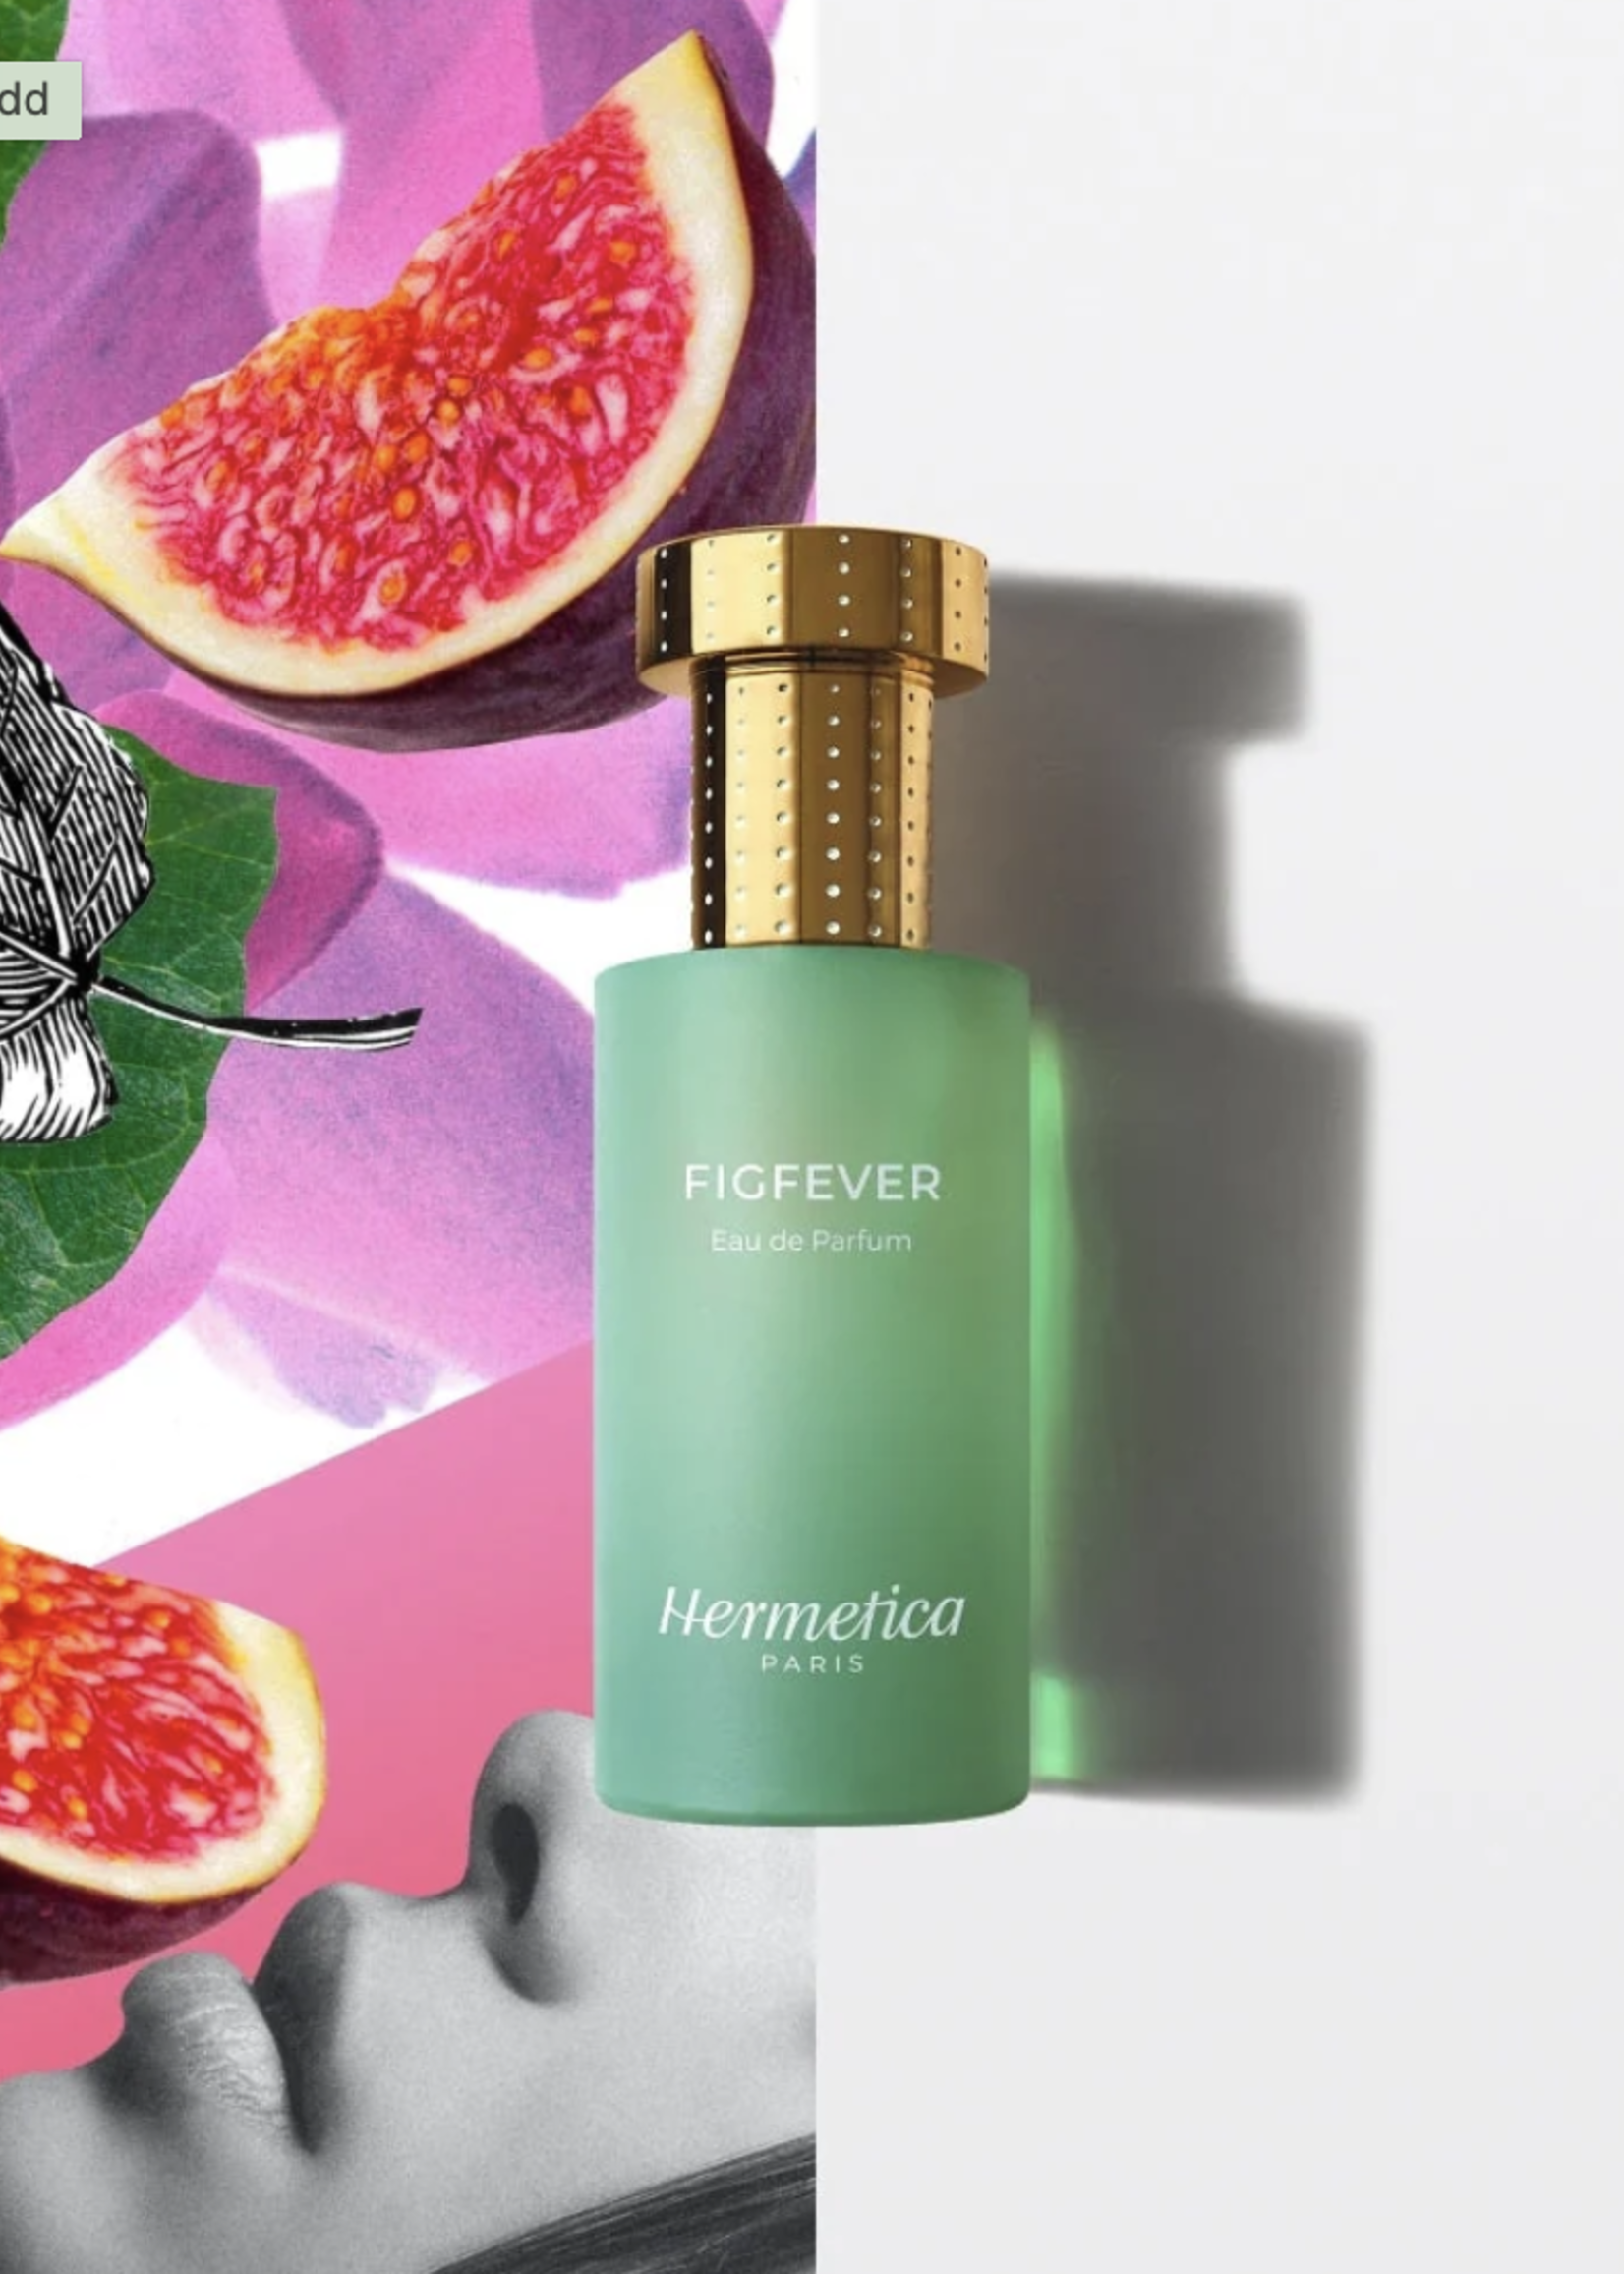 Hermetica Fig Fever 50ml